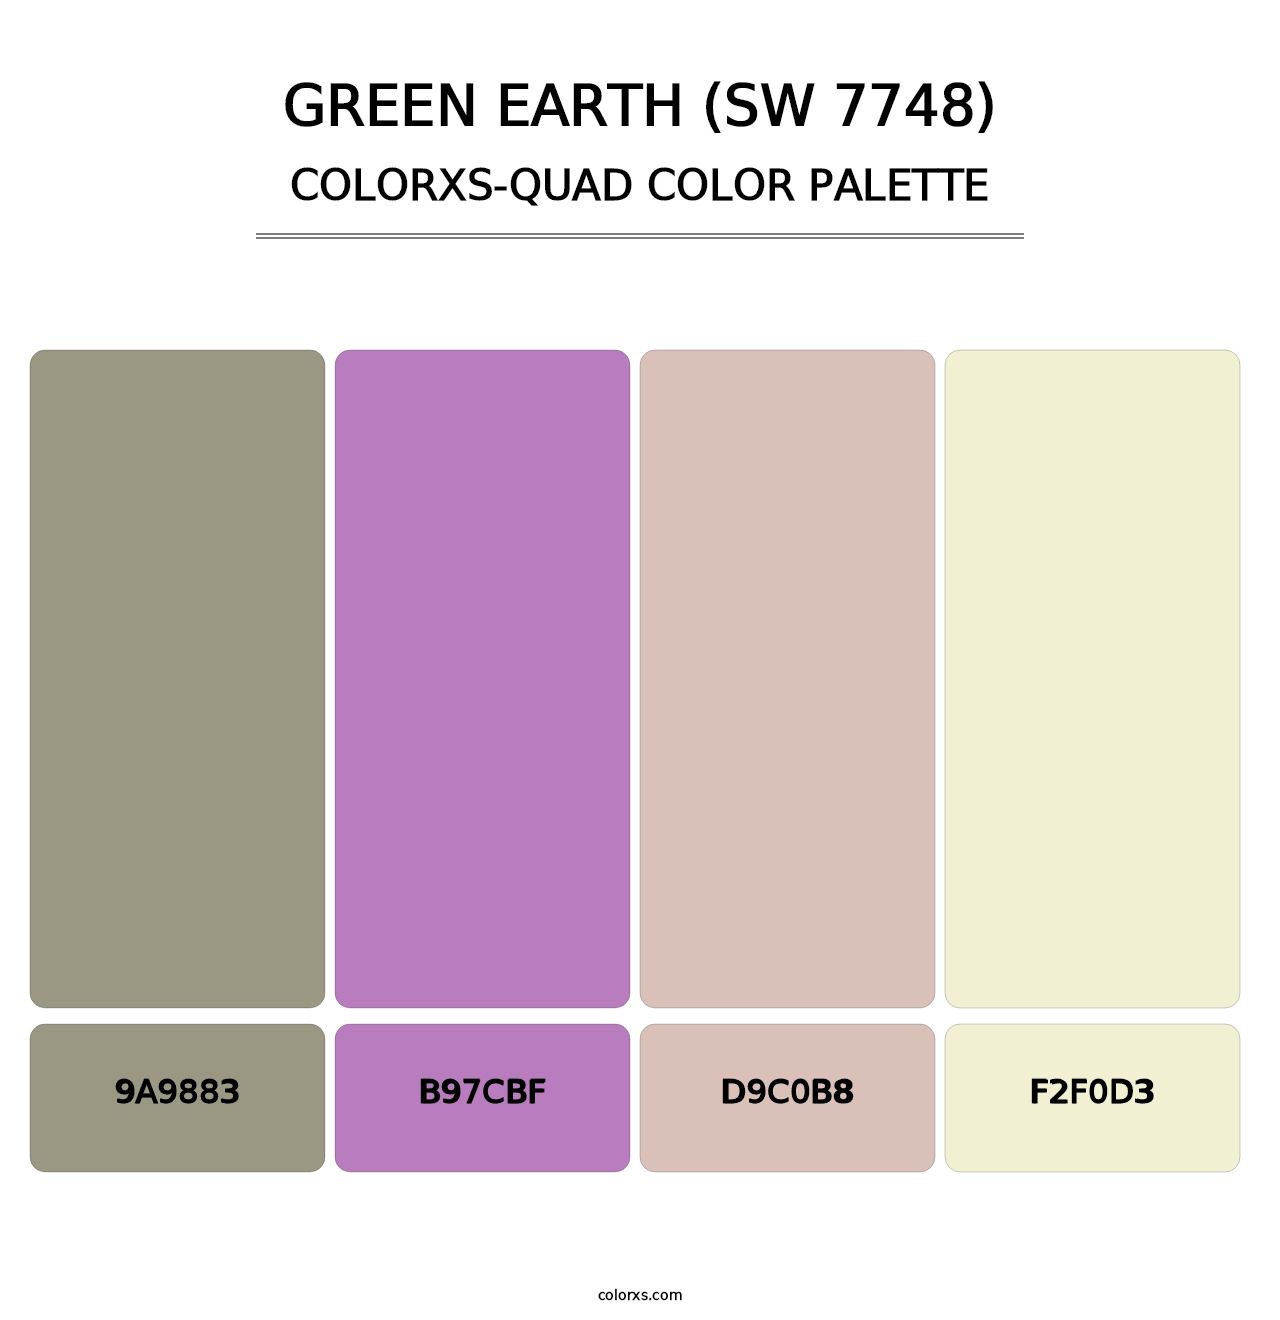 Green Earth (SW 7748) - Colorxs Quad Palette